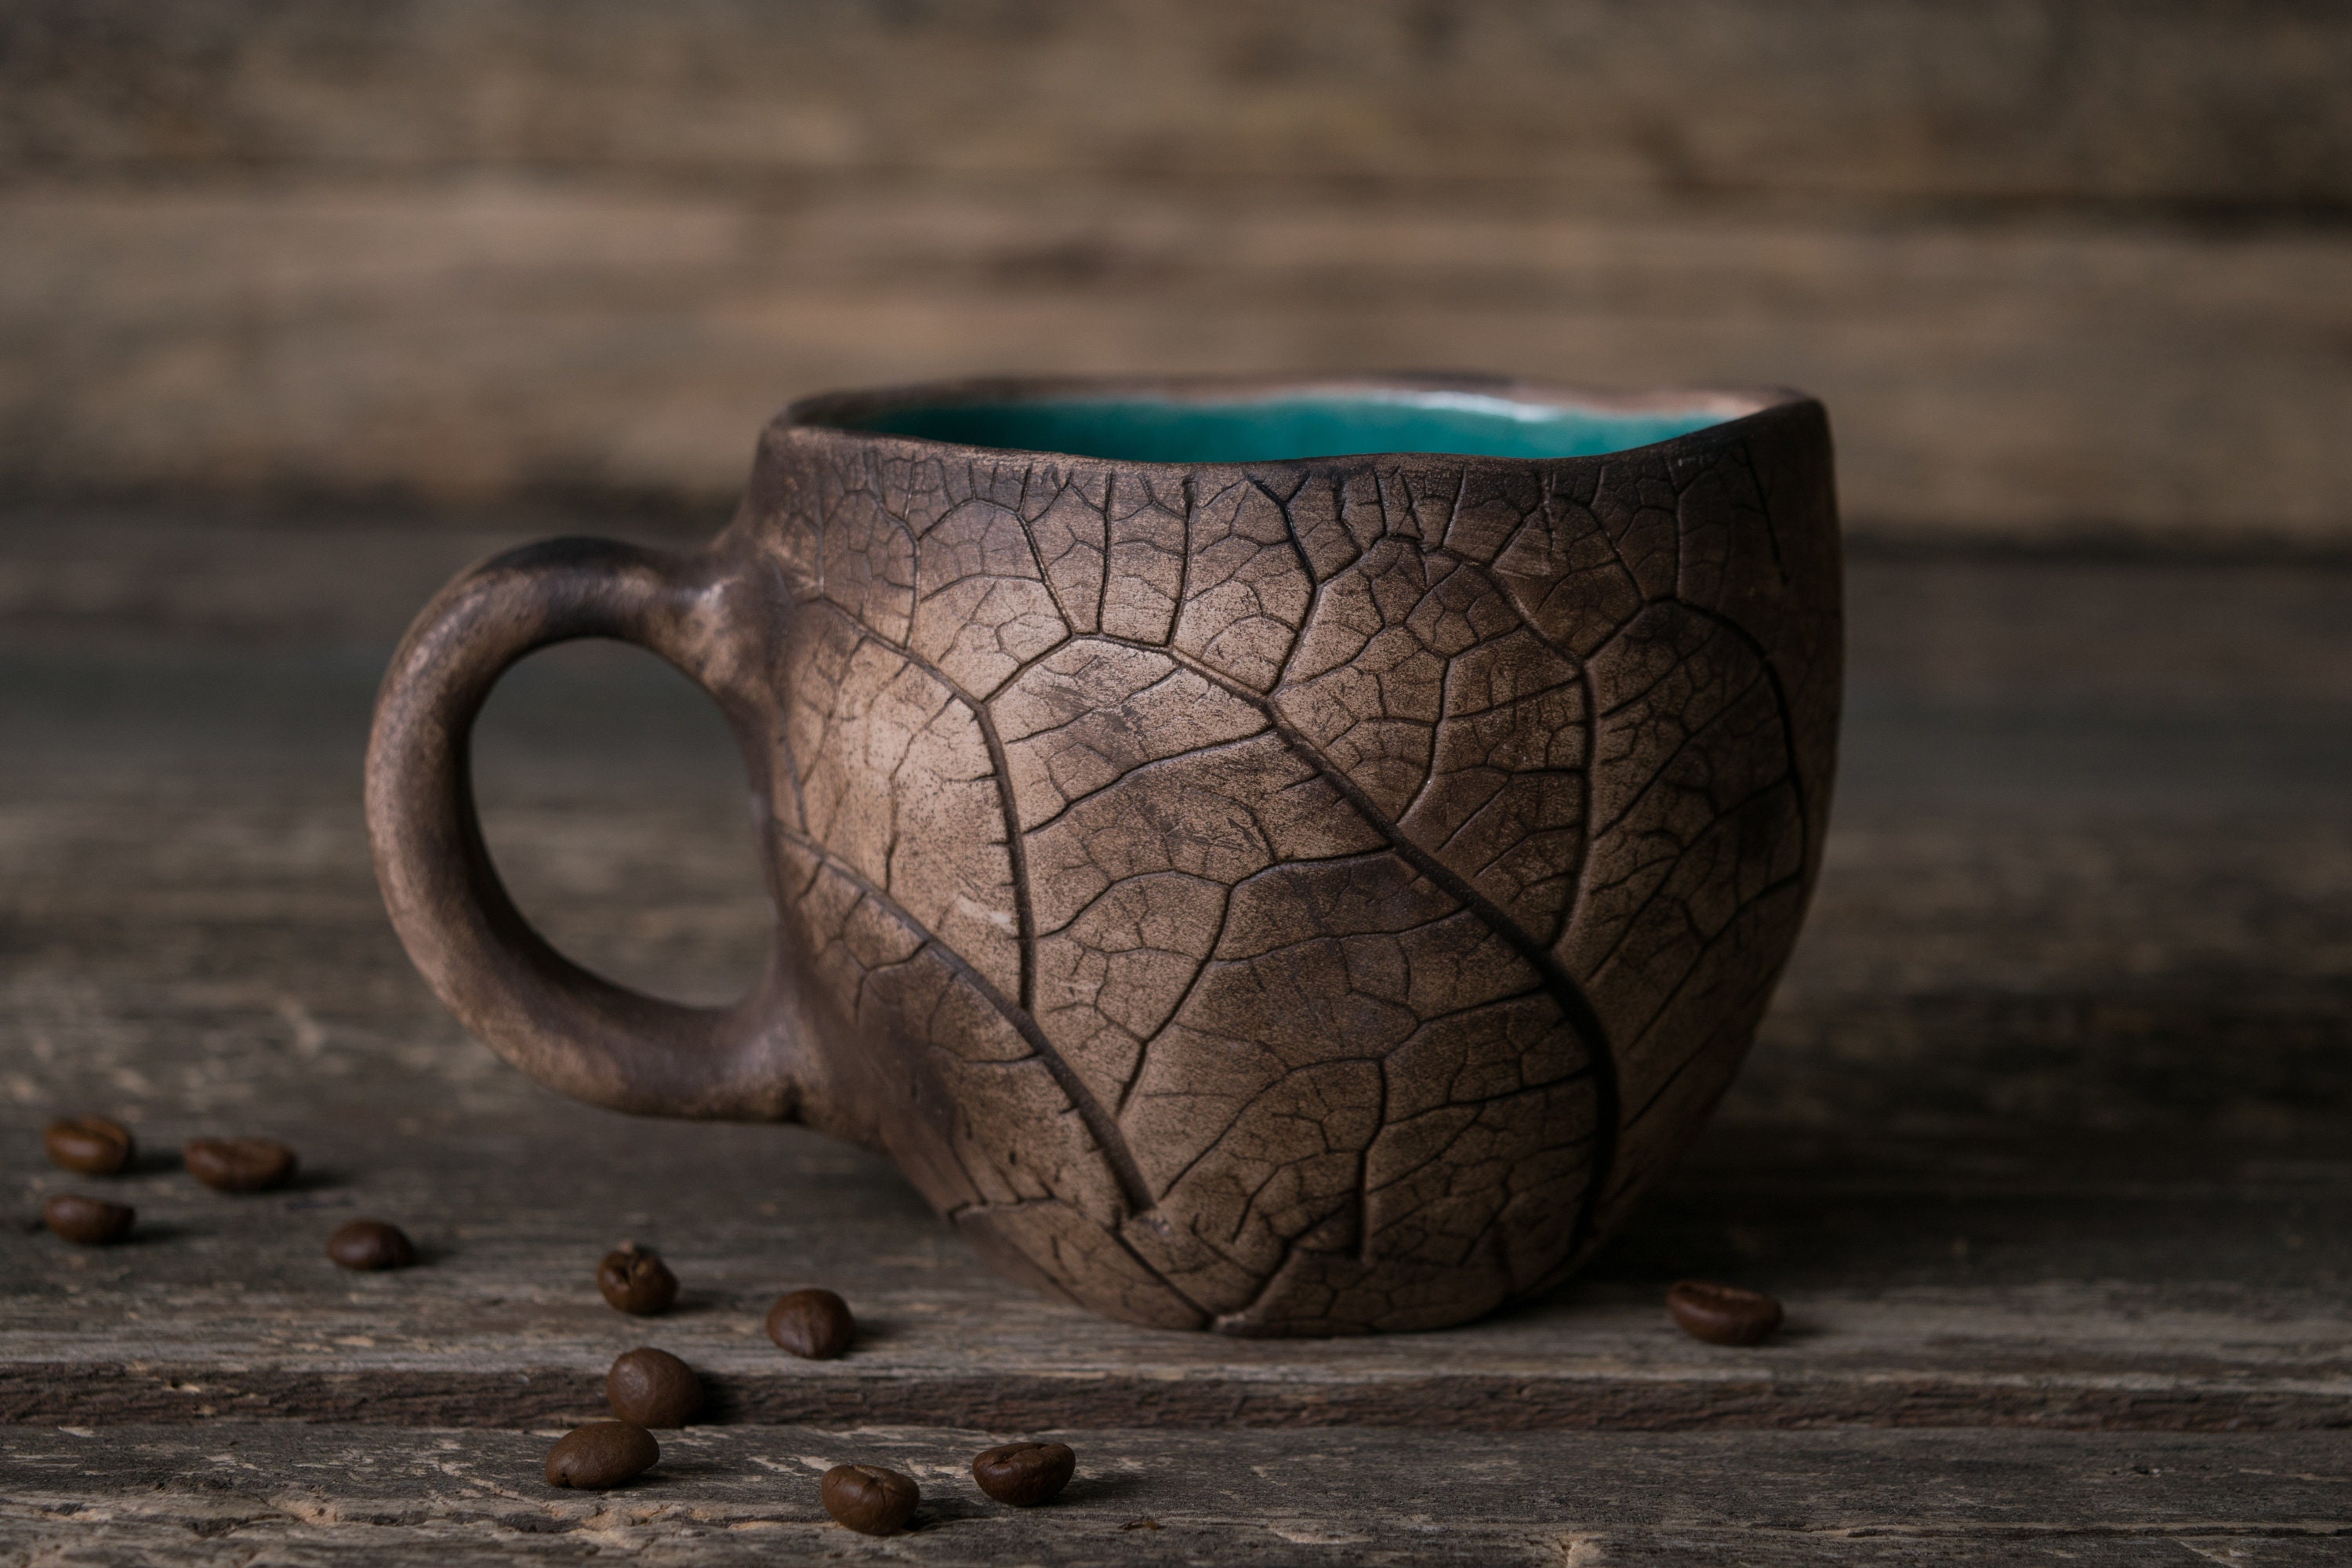 Leaf Pottery Mug